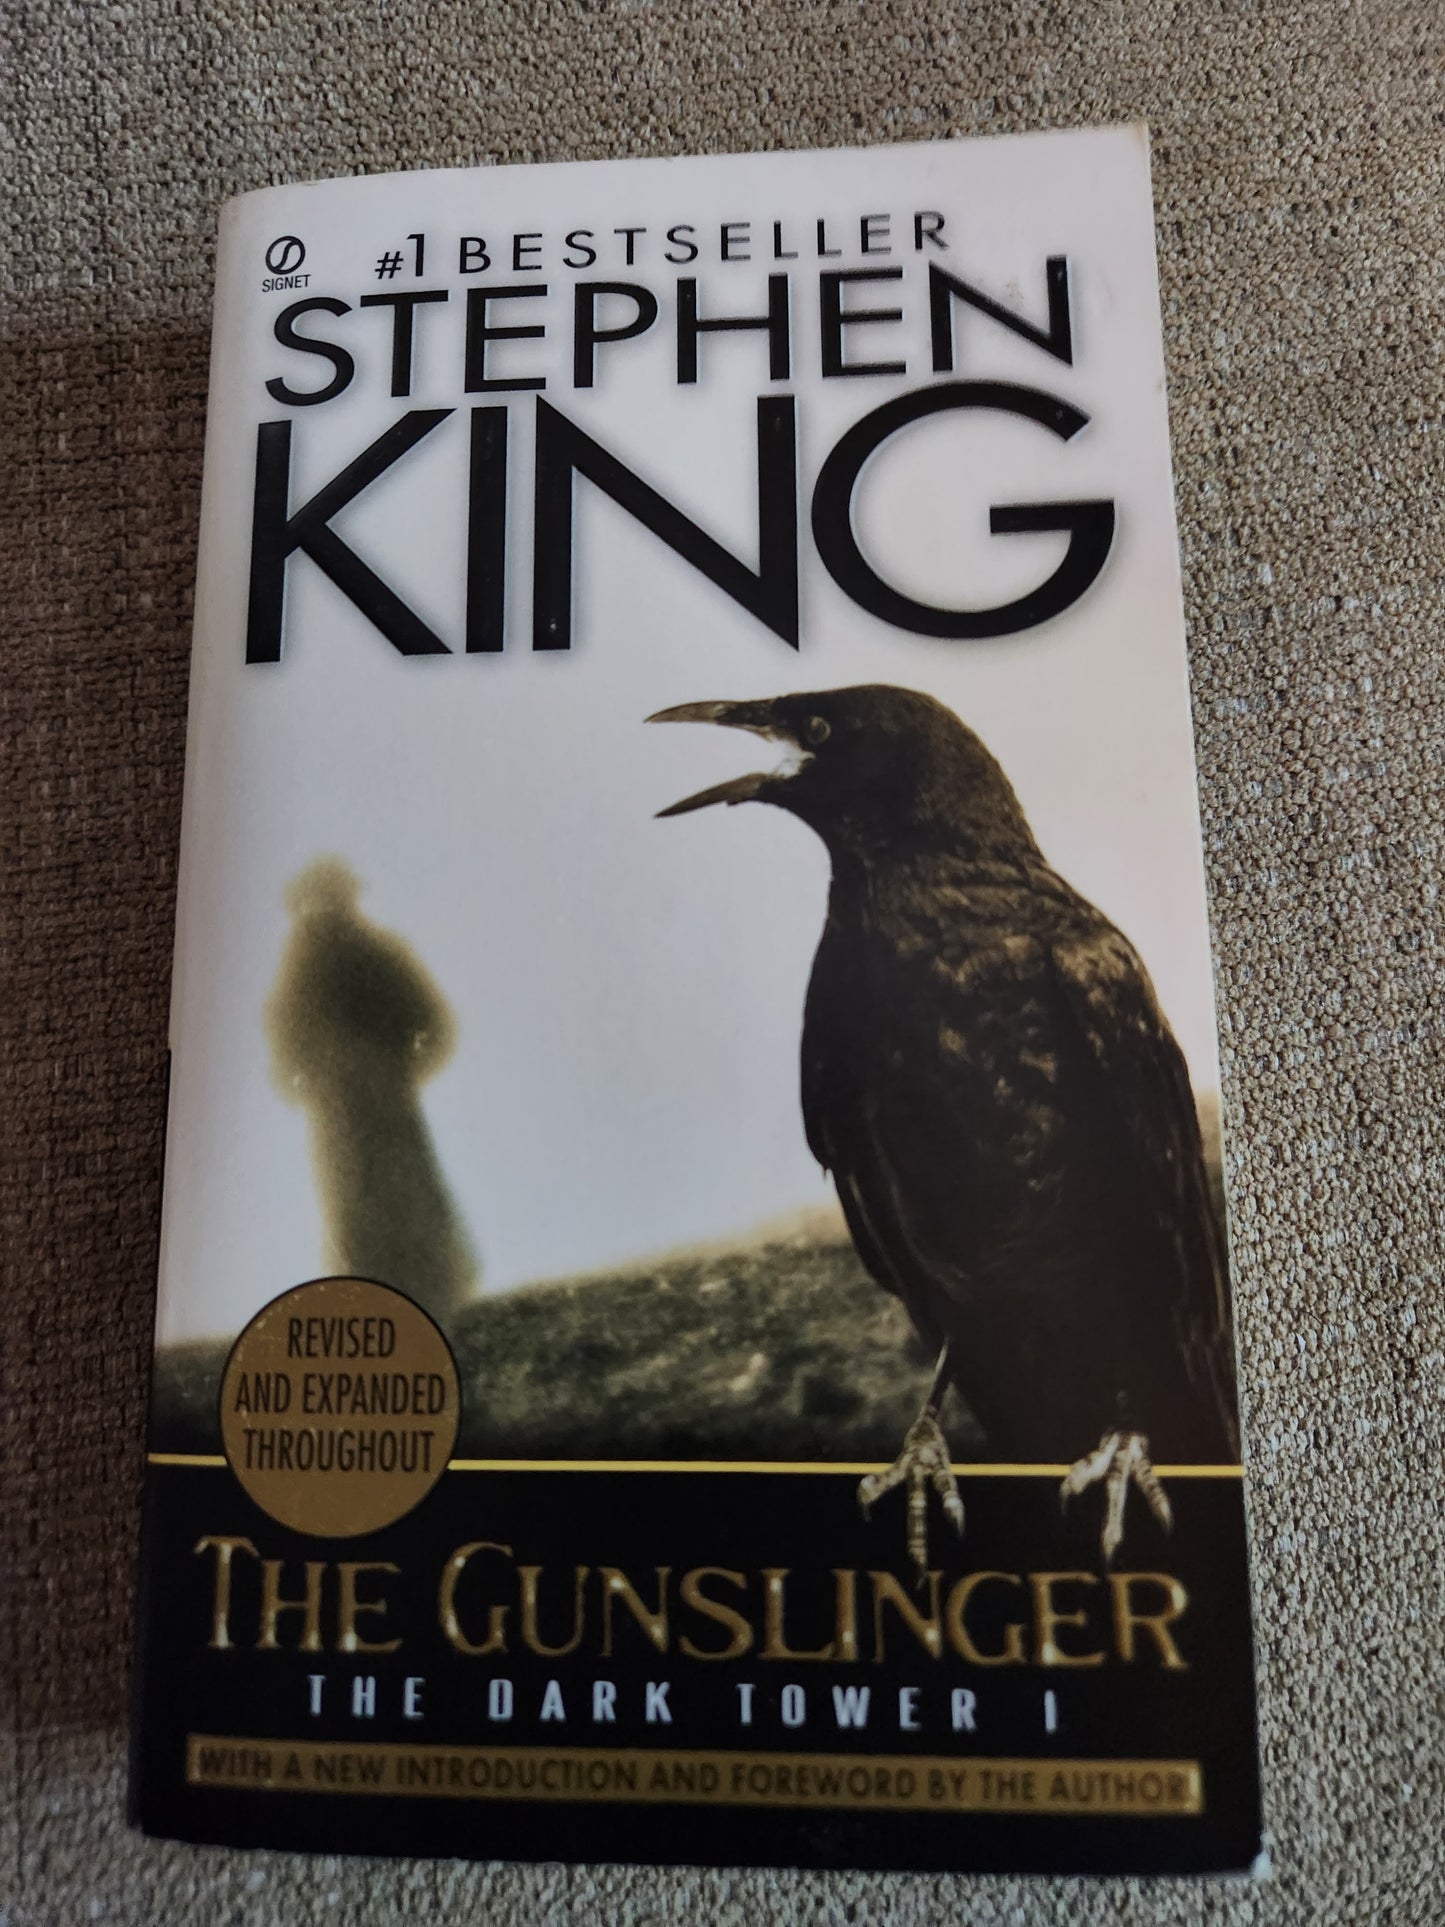 "Gunslinger", Dark Tower I by Stephen King - Dead Tree Dreams Bookstore